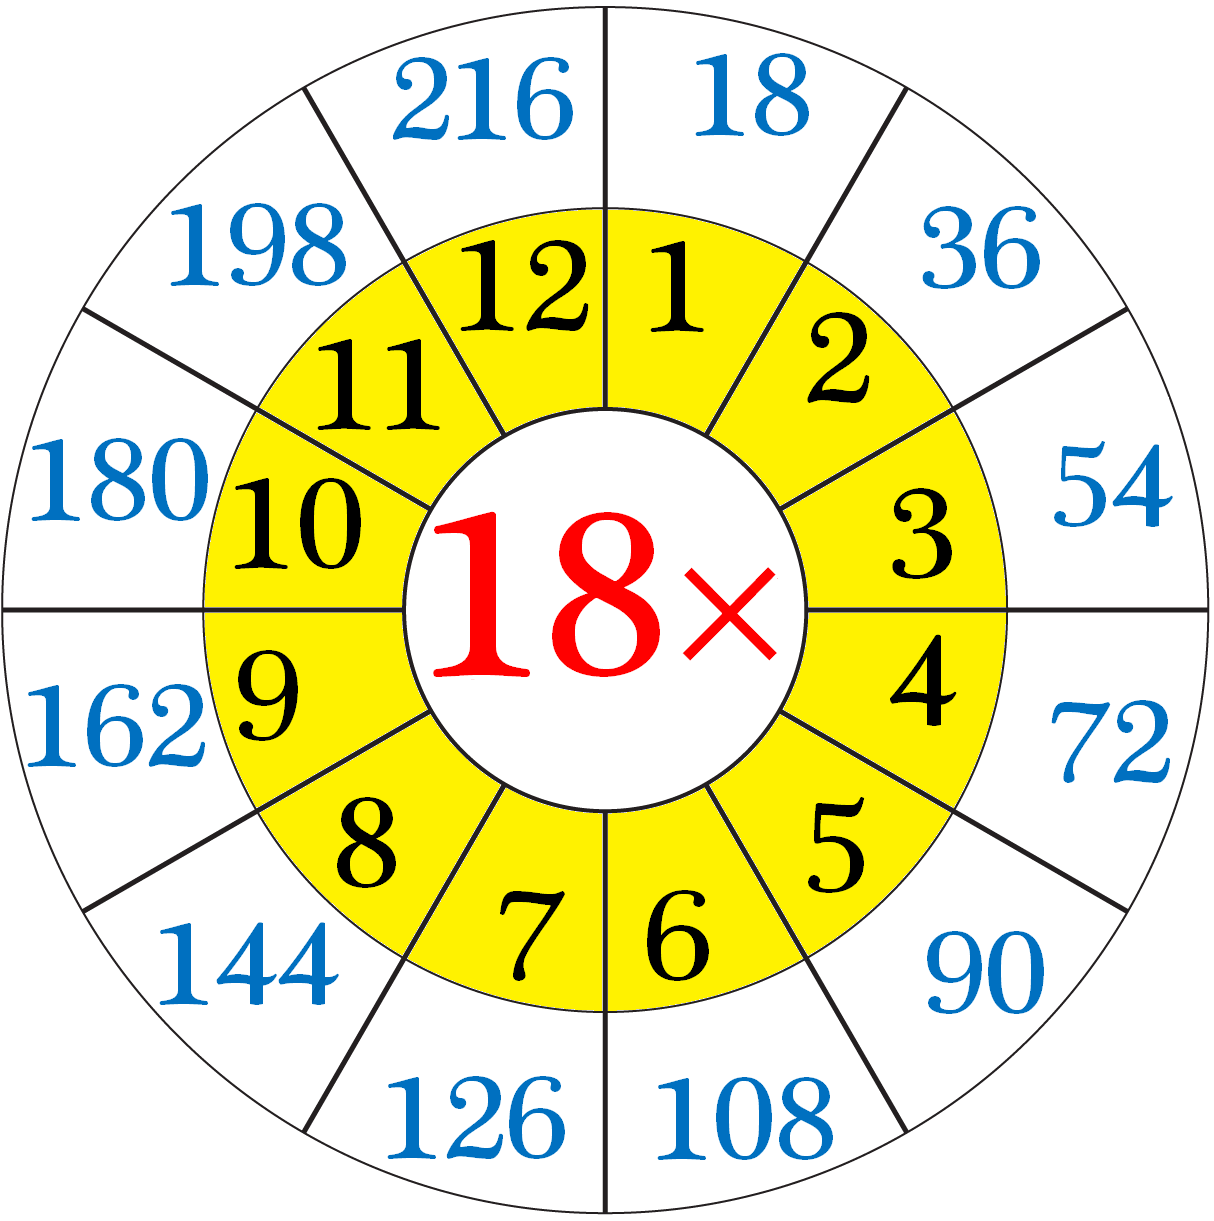 Multiplication Table of Eighteen